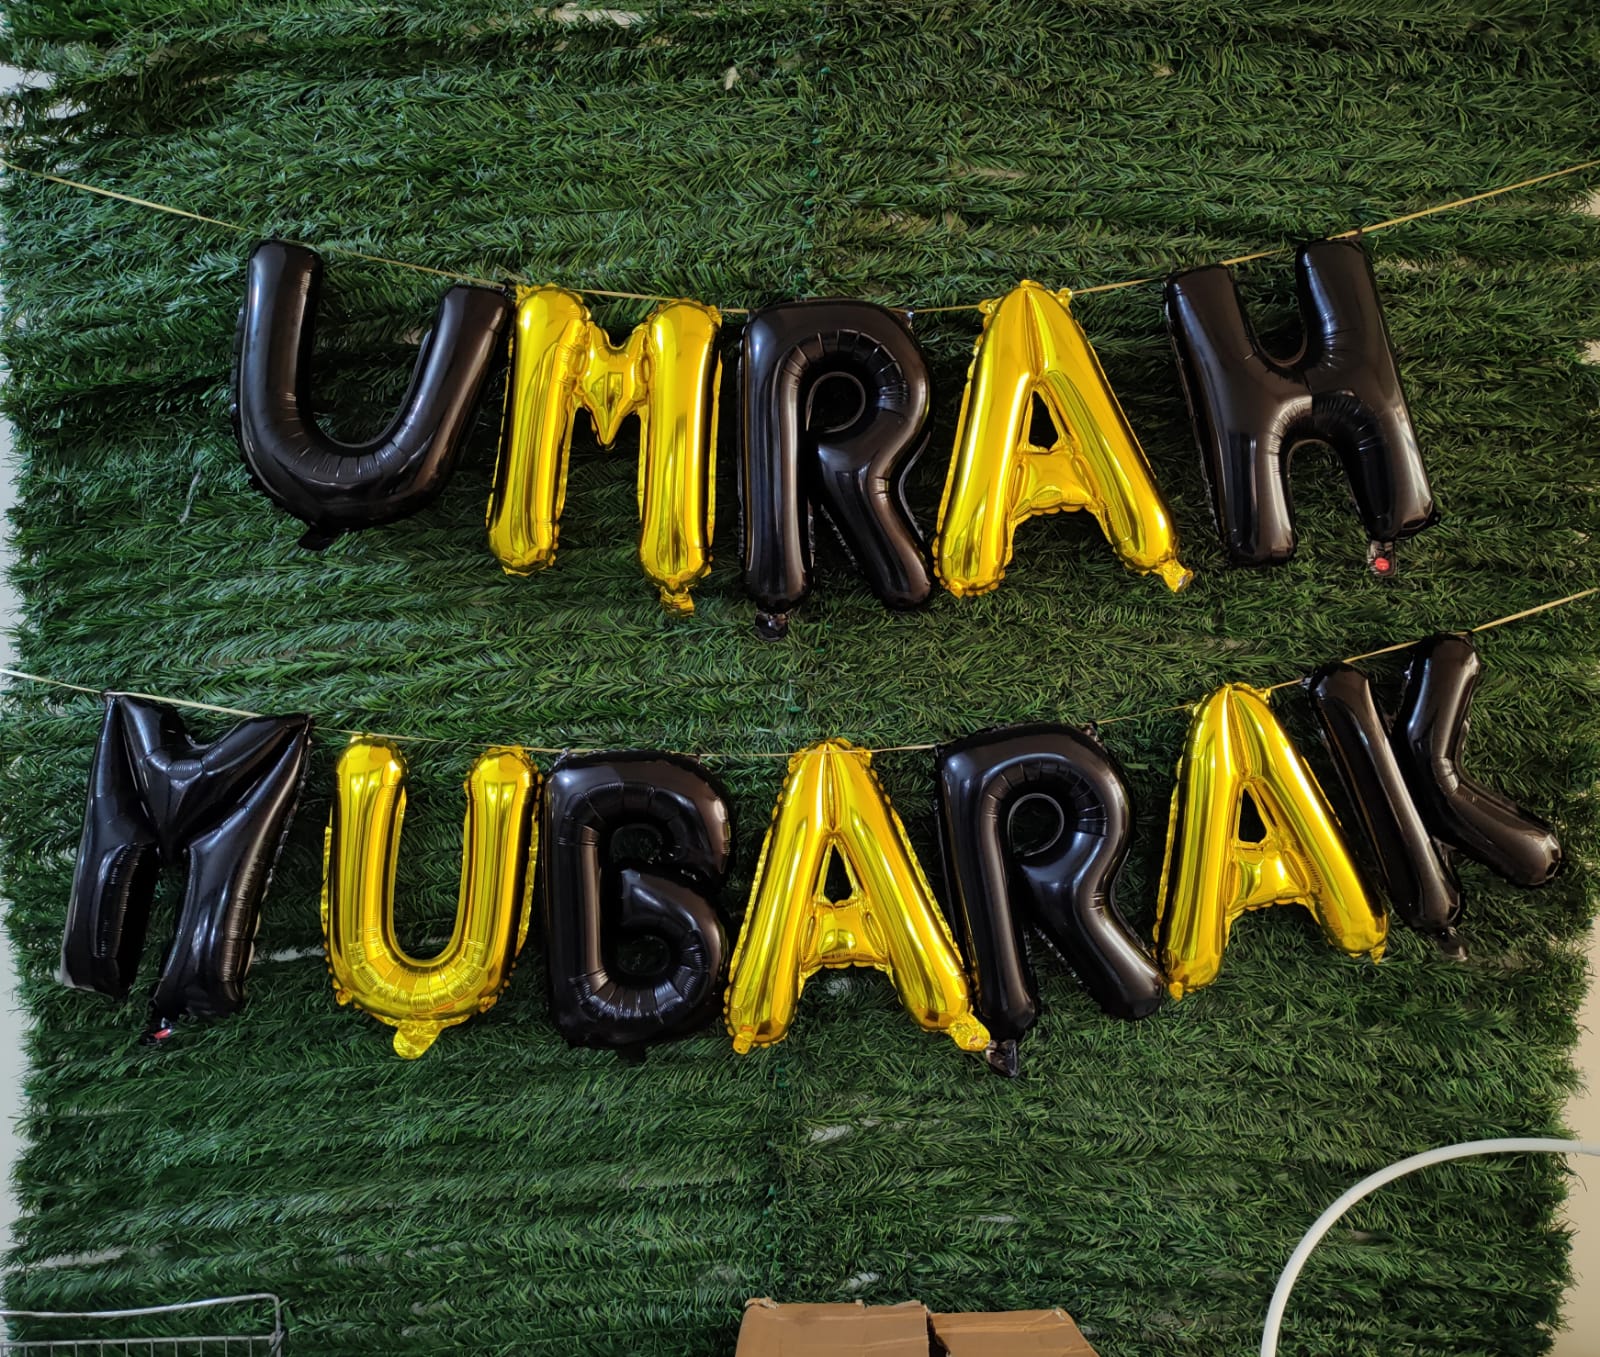 Balloon Golden Umrah Mubarak Theme –